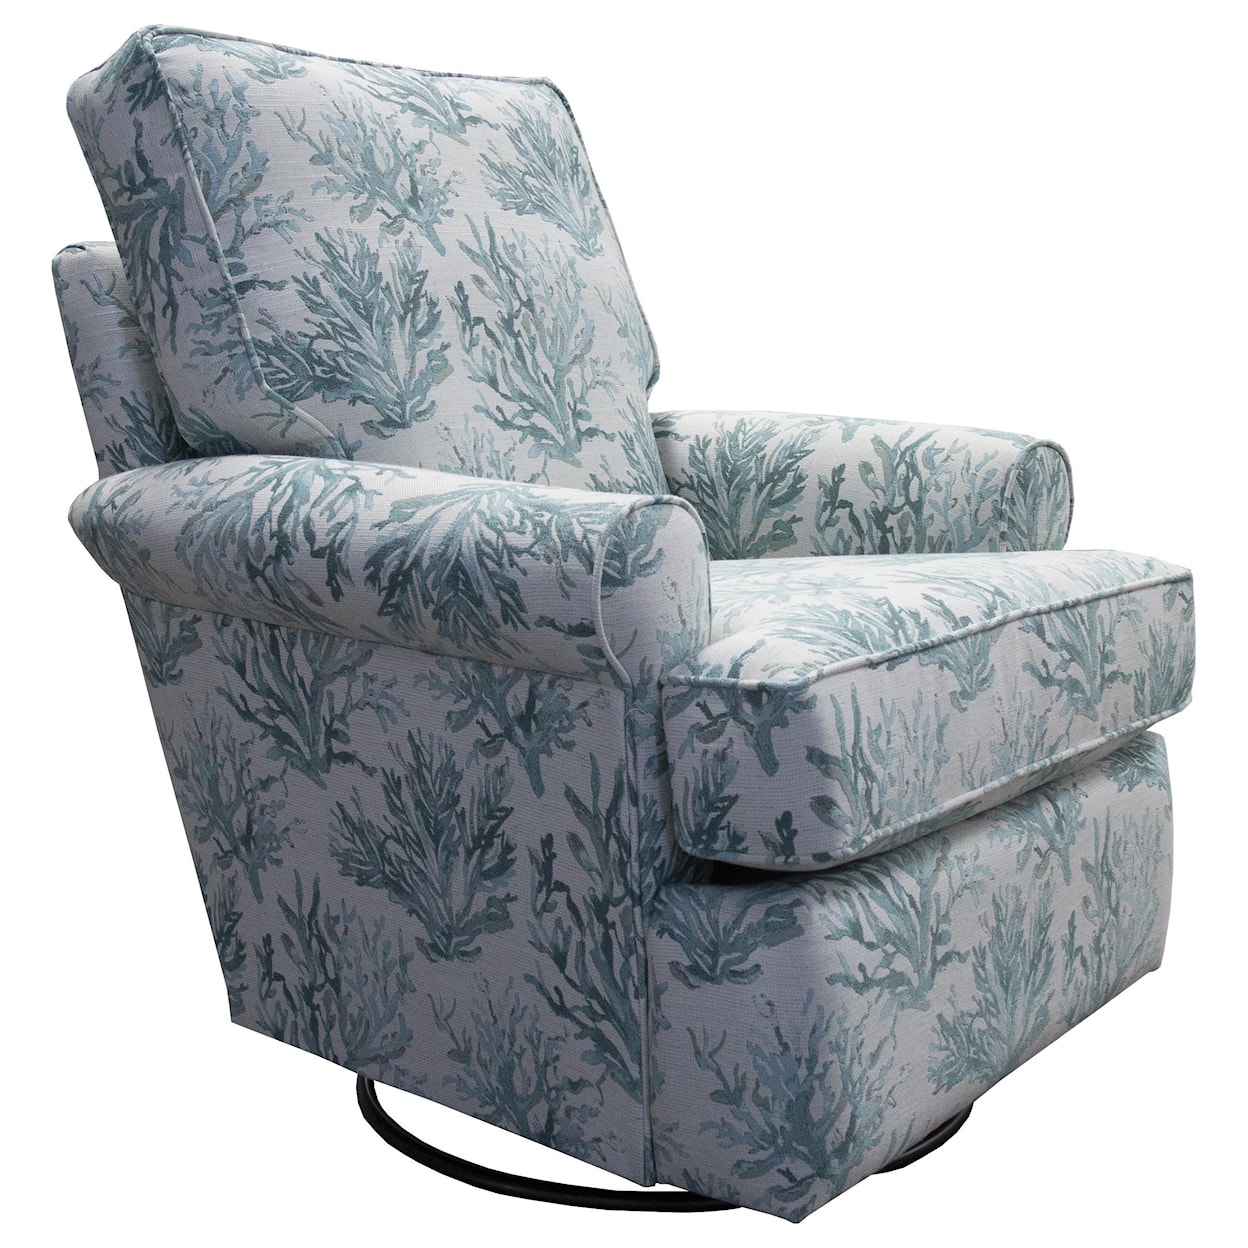 Capris Furniture SG121 Swivel Glider Chair